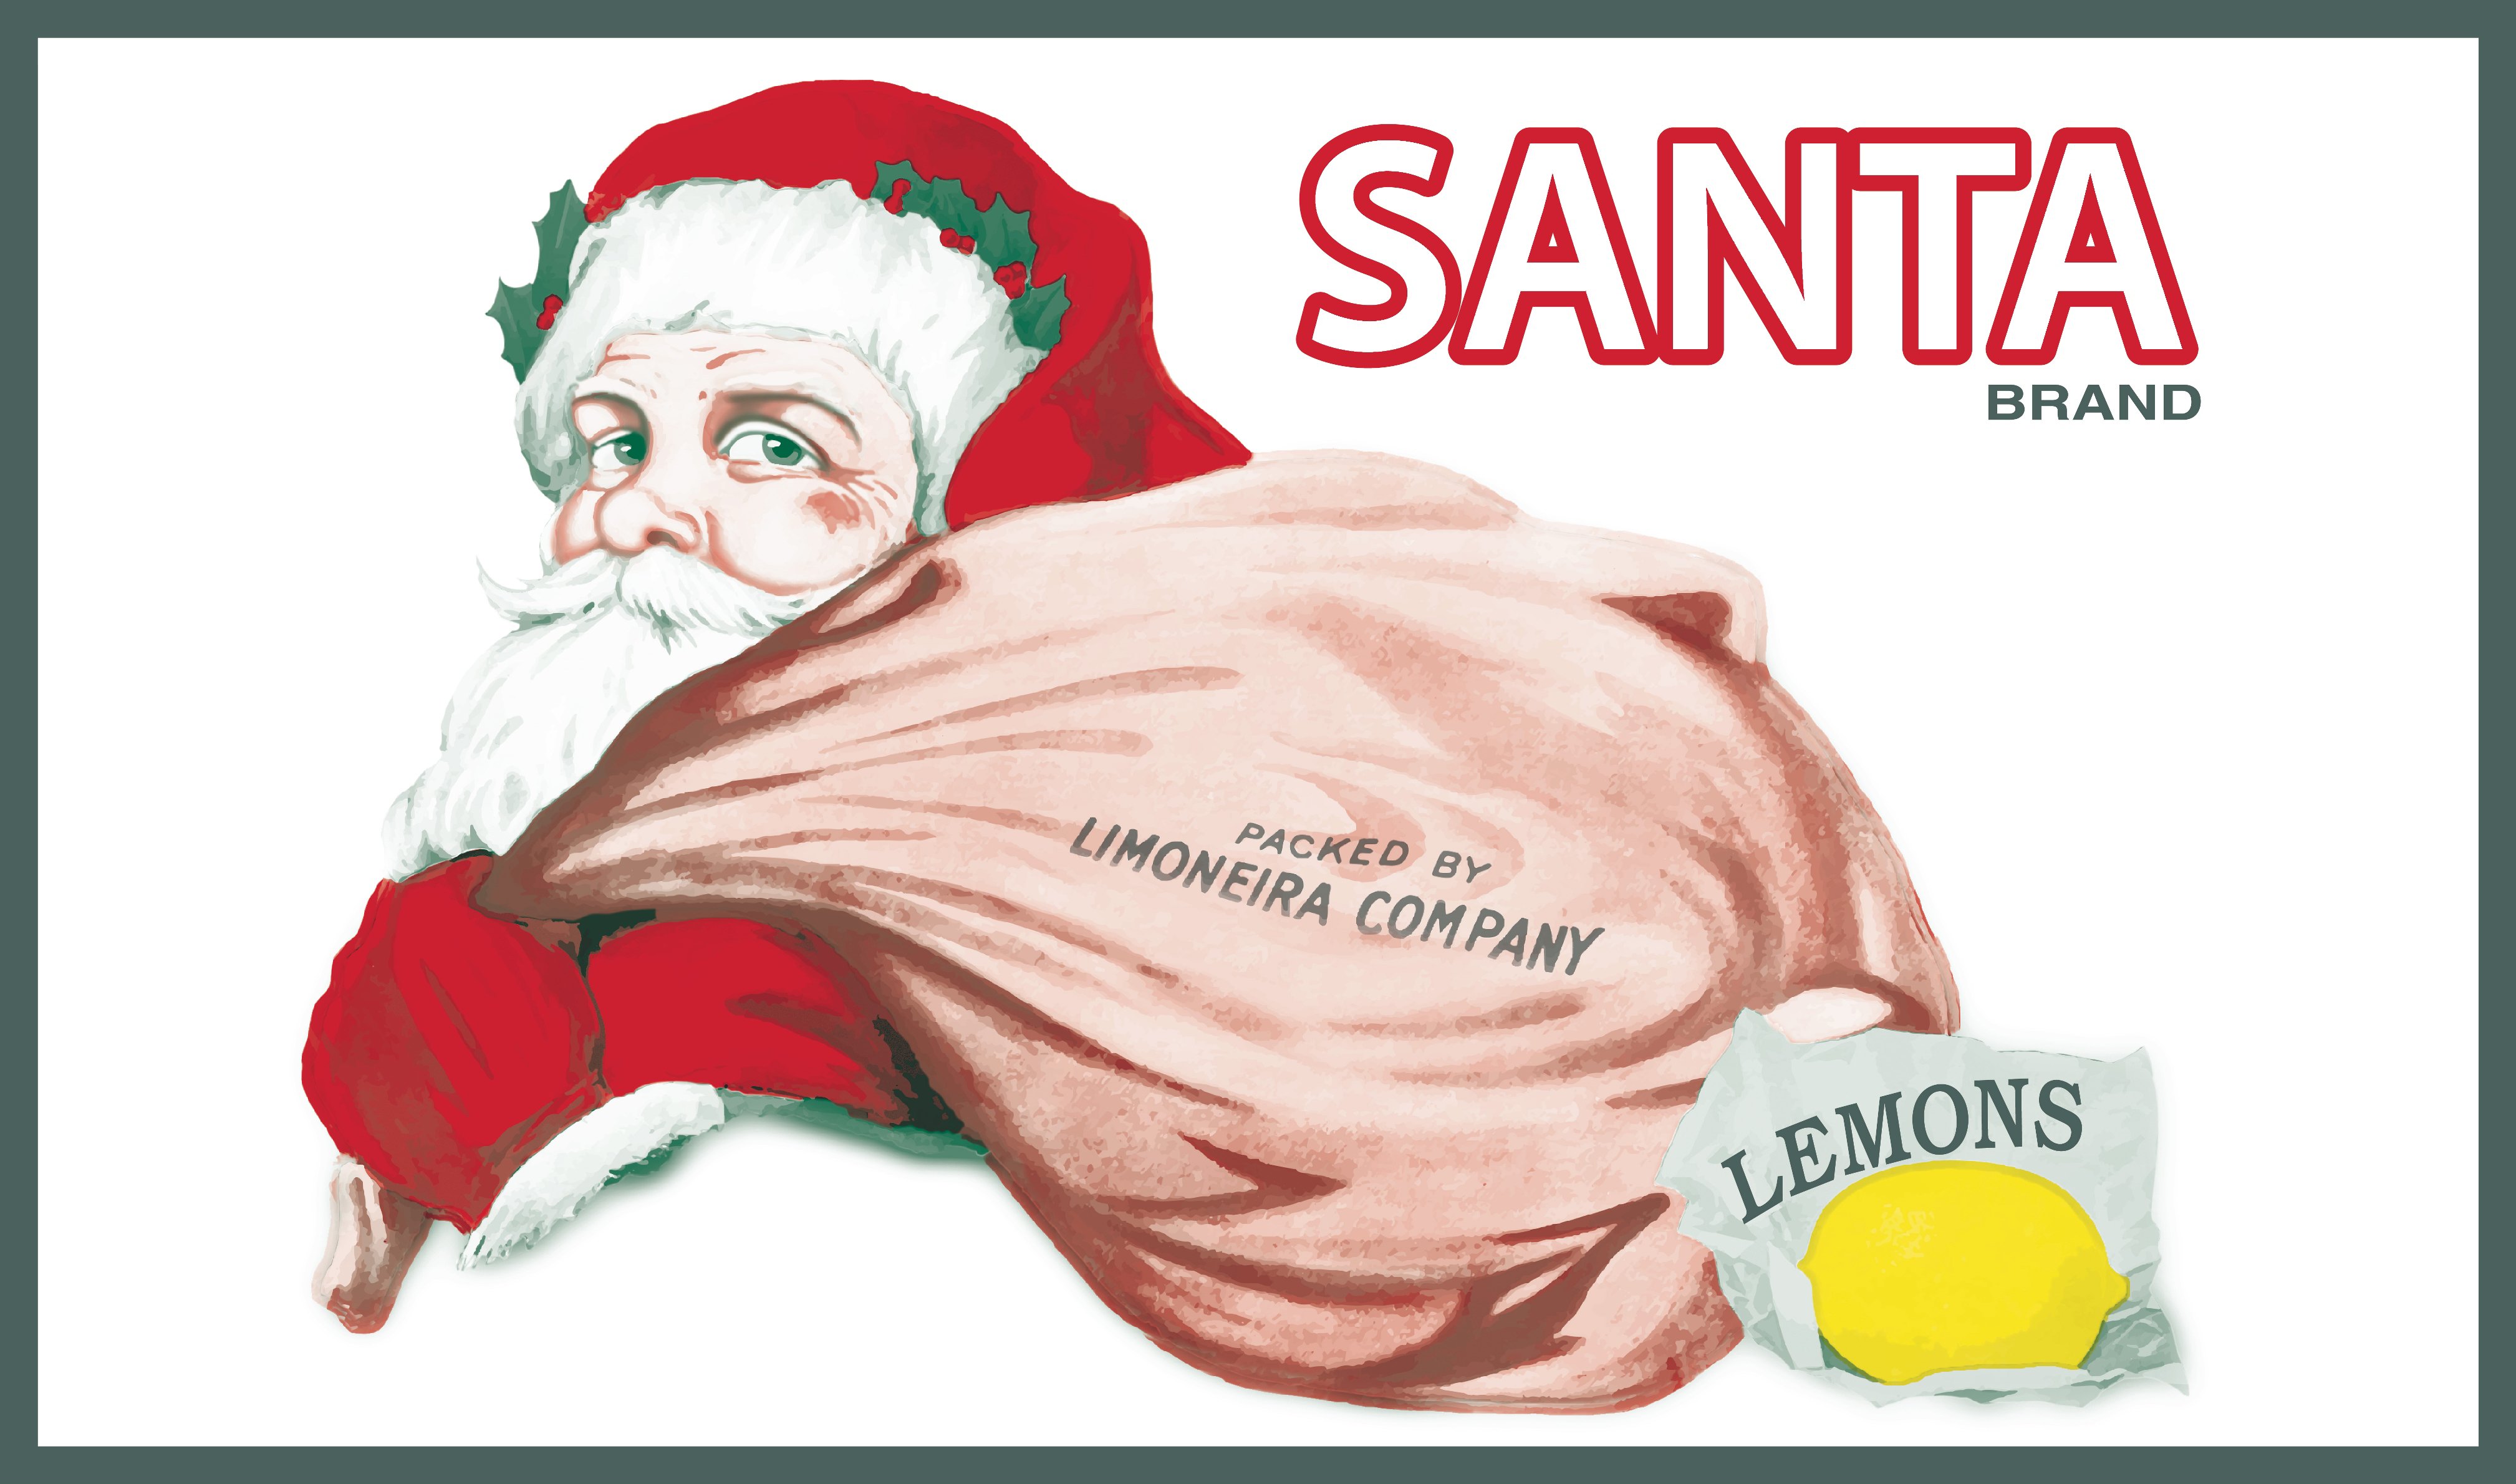 Trademark Logo SANTA BRAND PACKED BY LIMONEIRA COMPANY LEMONS